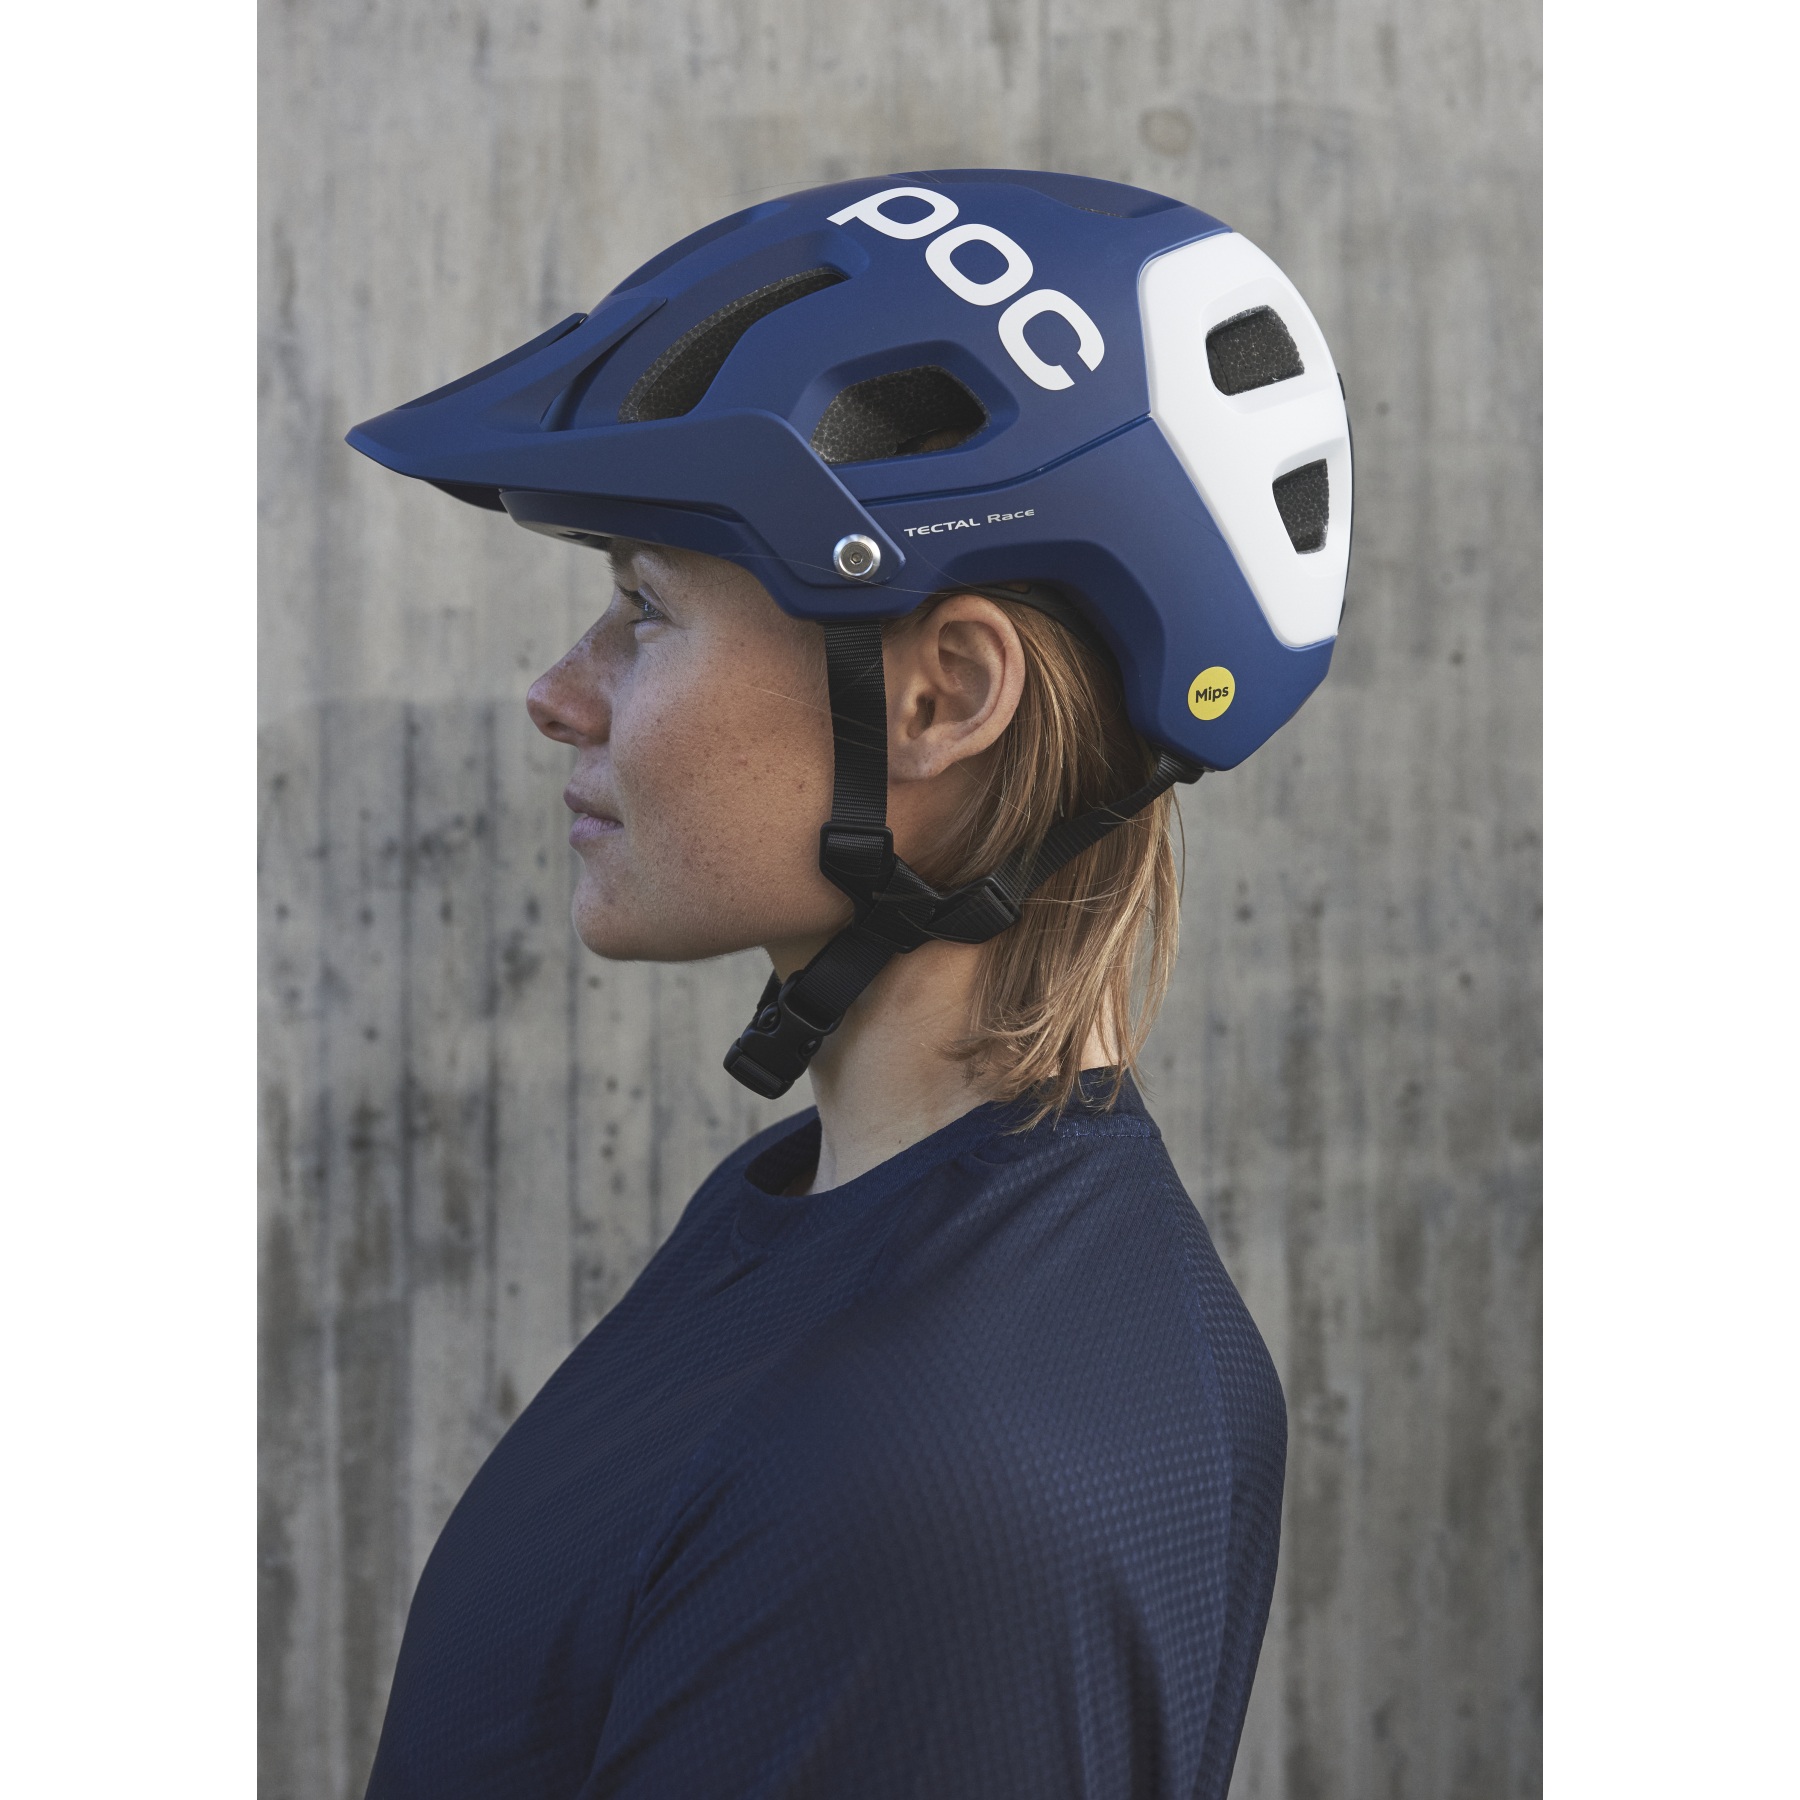 POC Tectal Race MIPS MTB-Helm hier kaufen